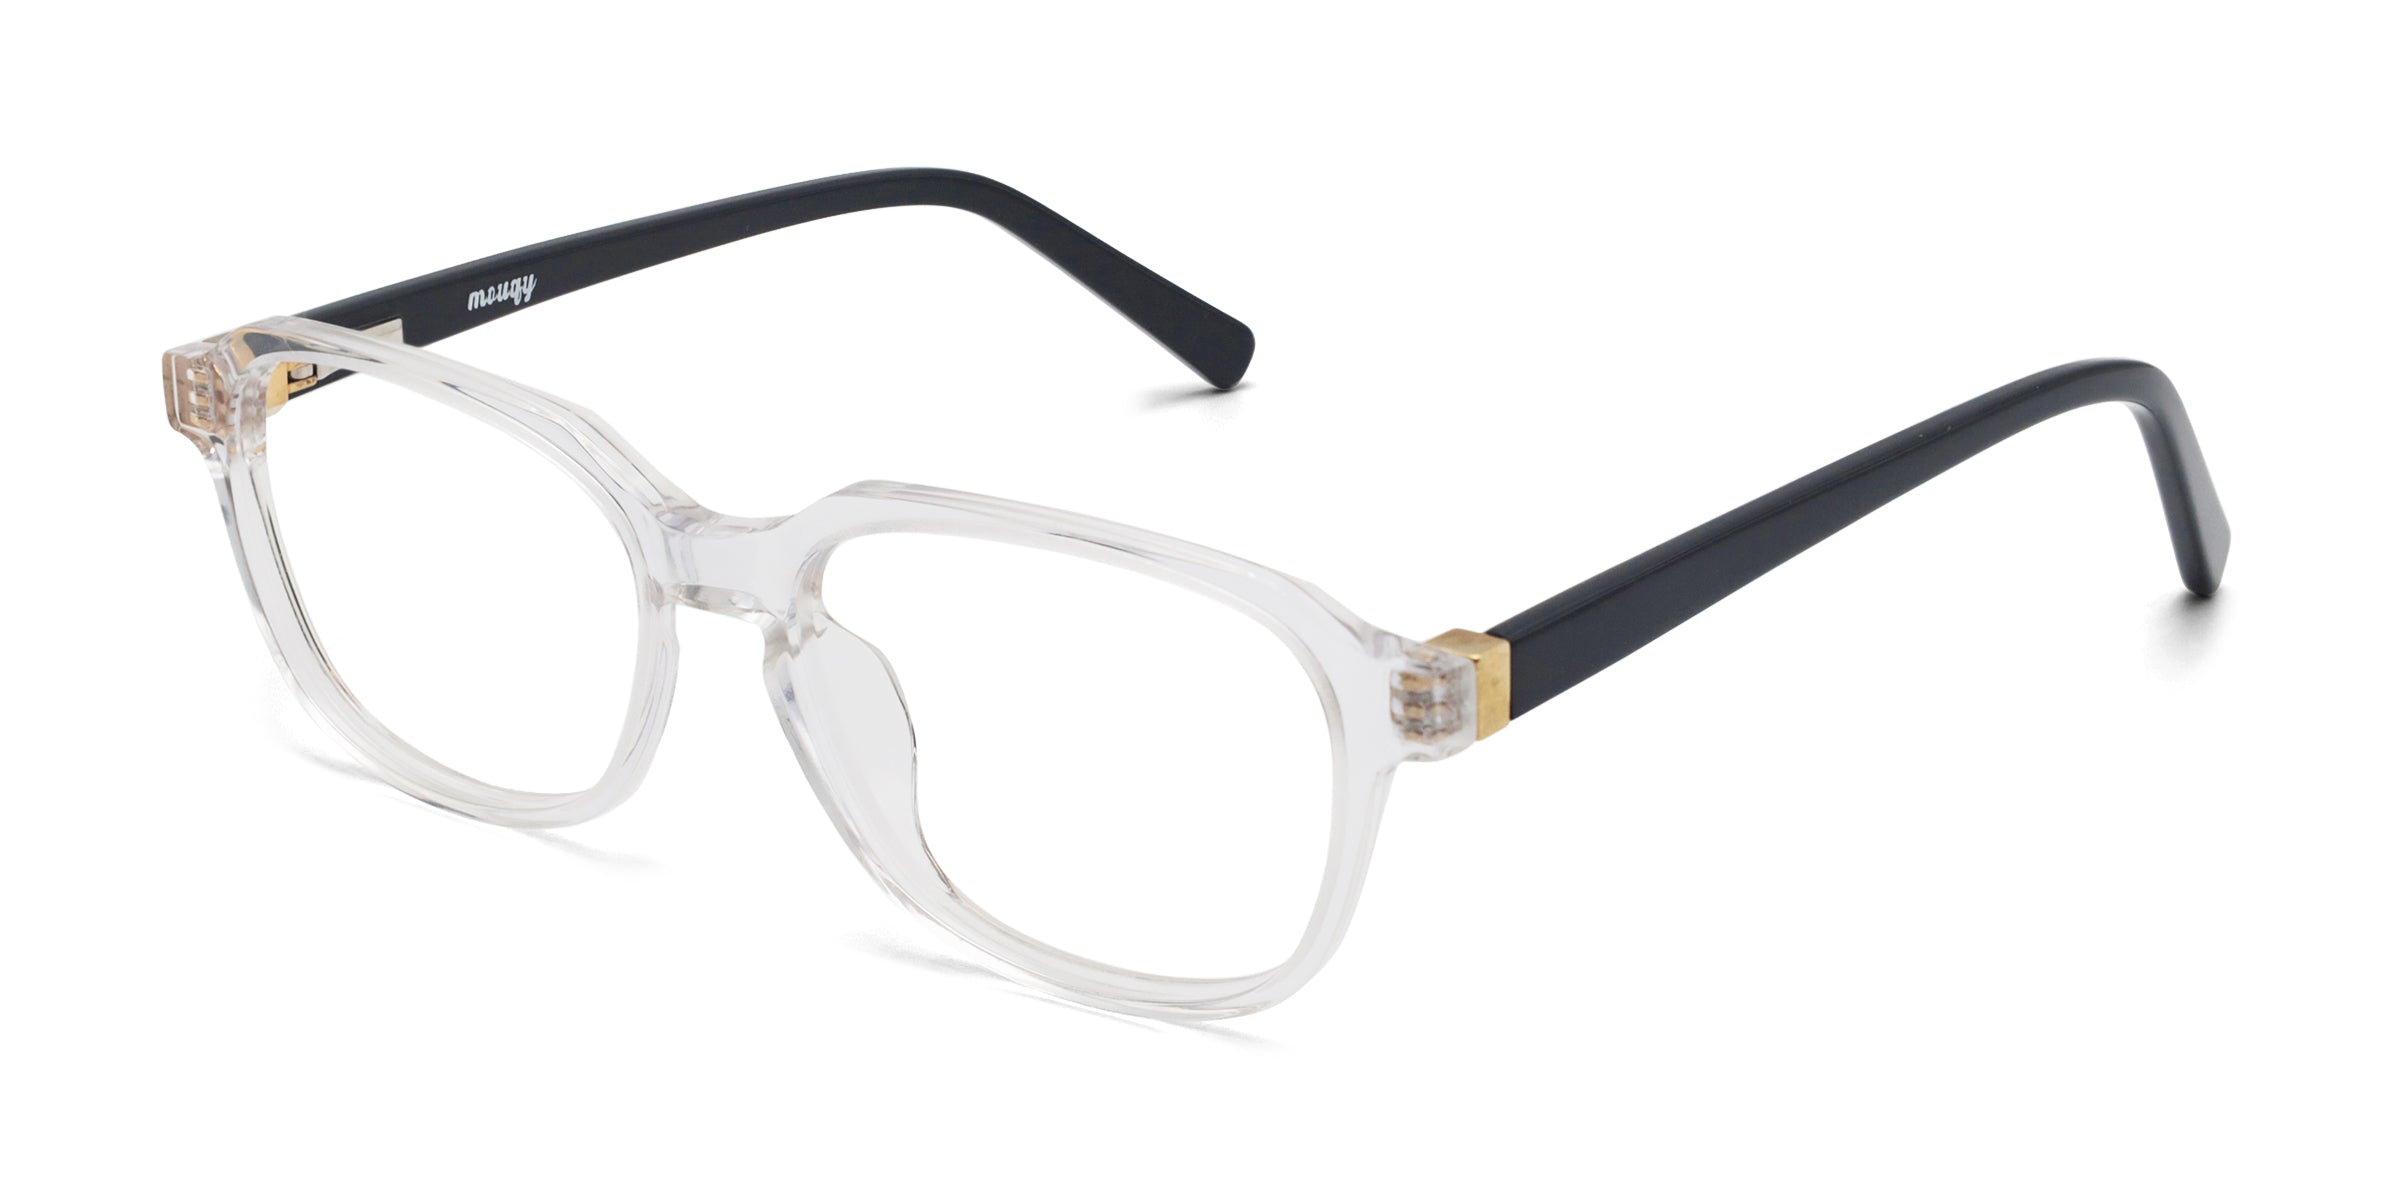 Dan Rectangle Clear Black eyeglasses frames angled view